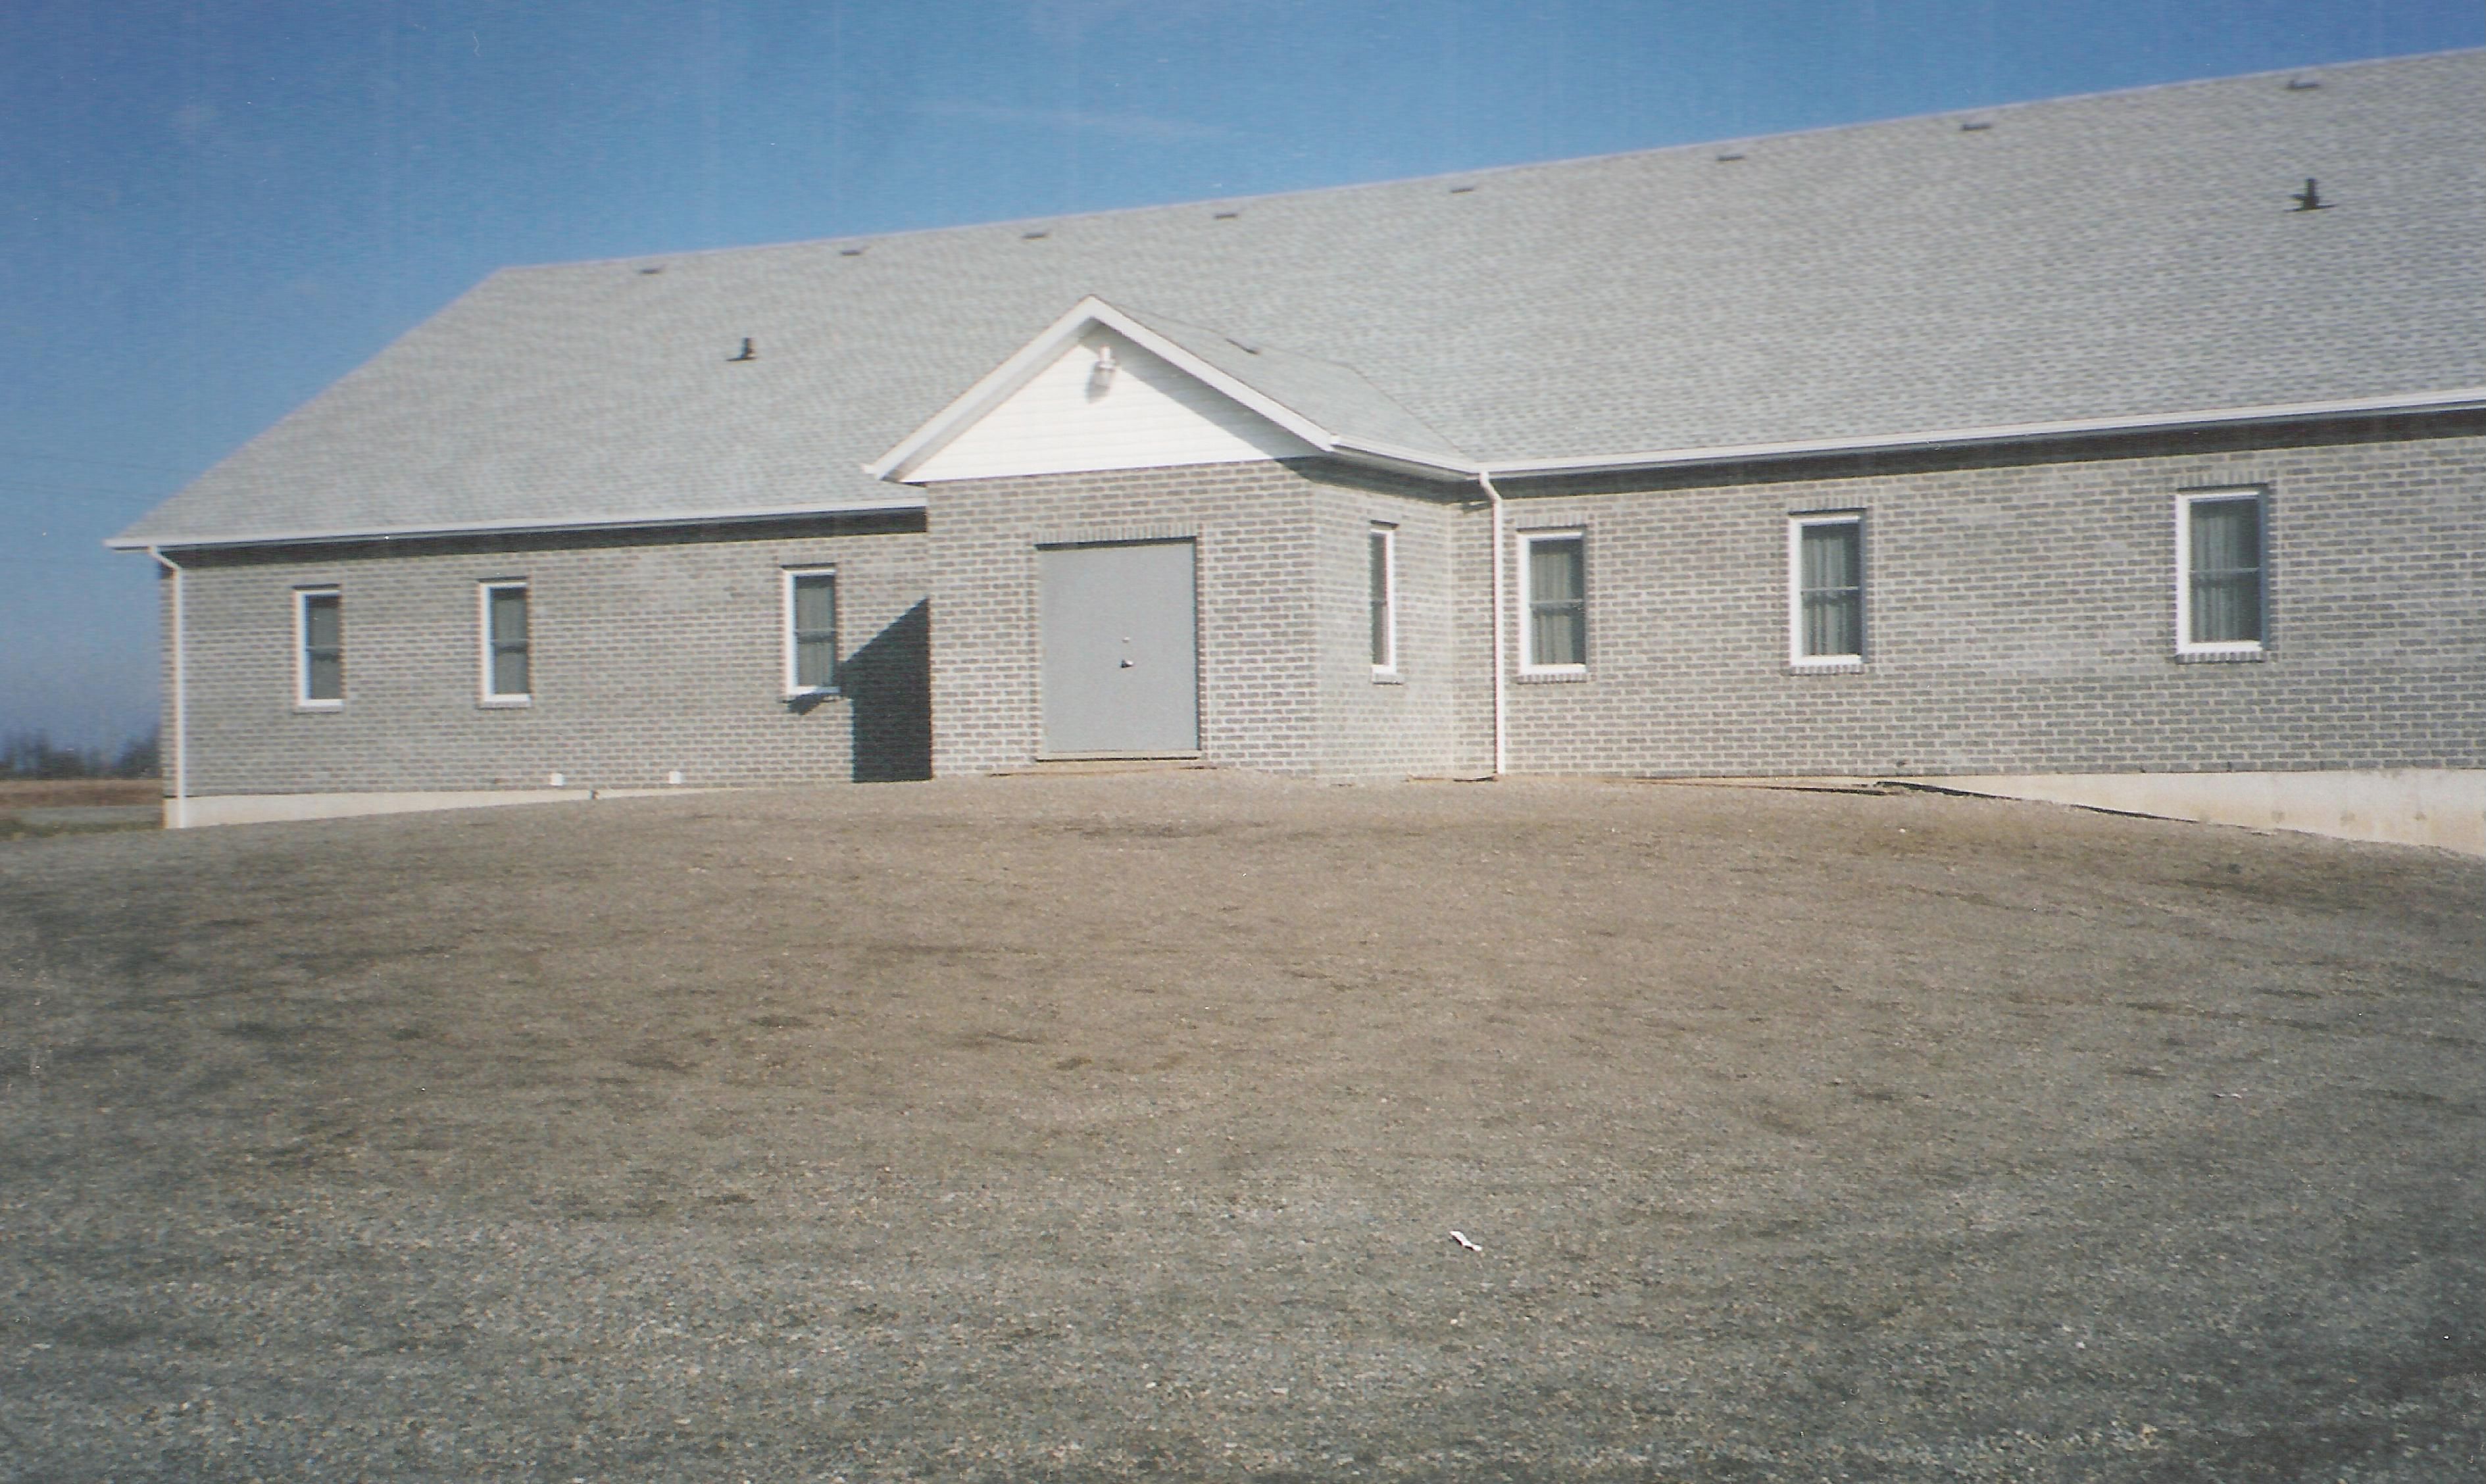 Long gray brick church